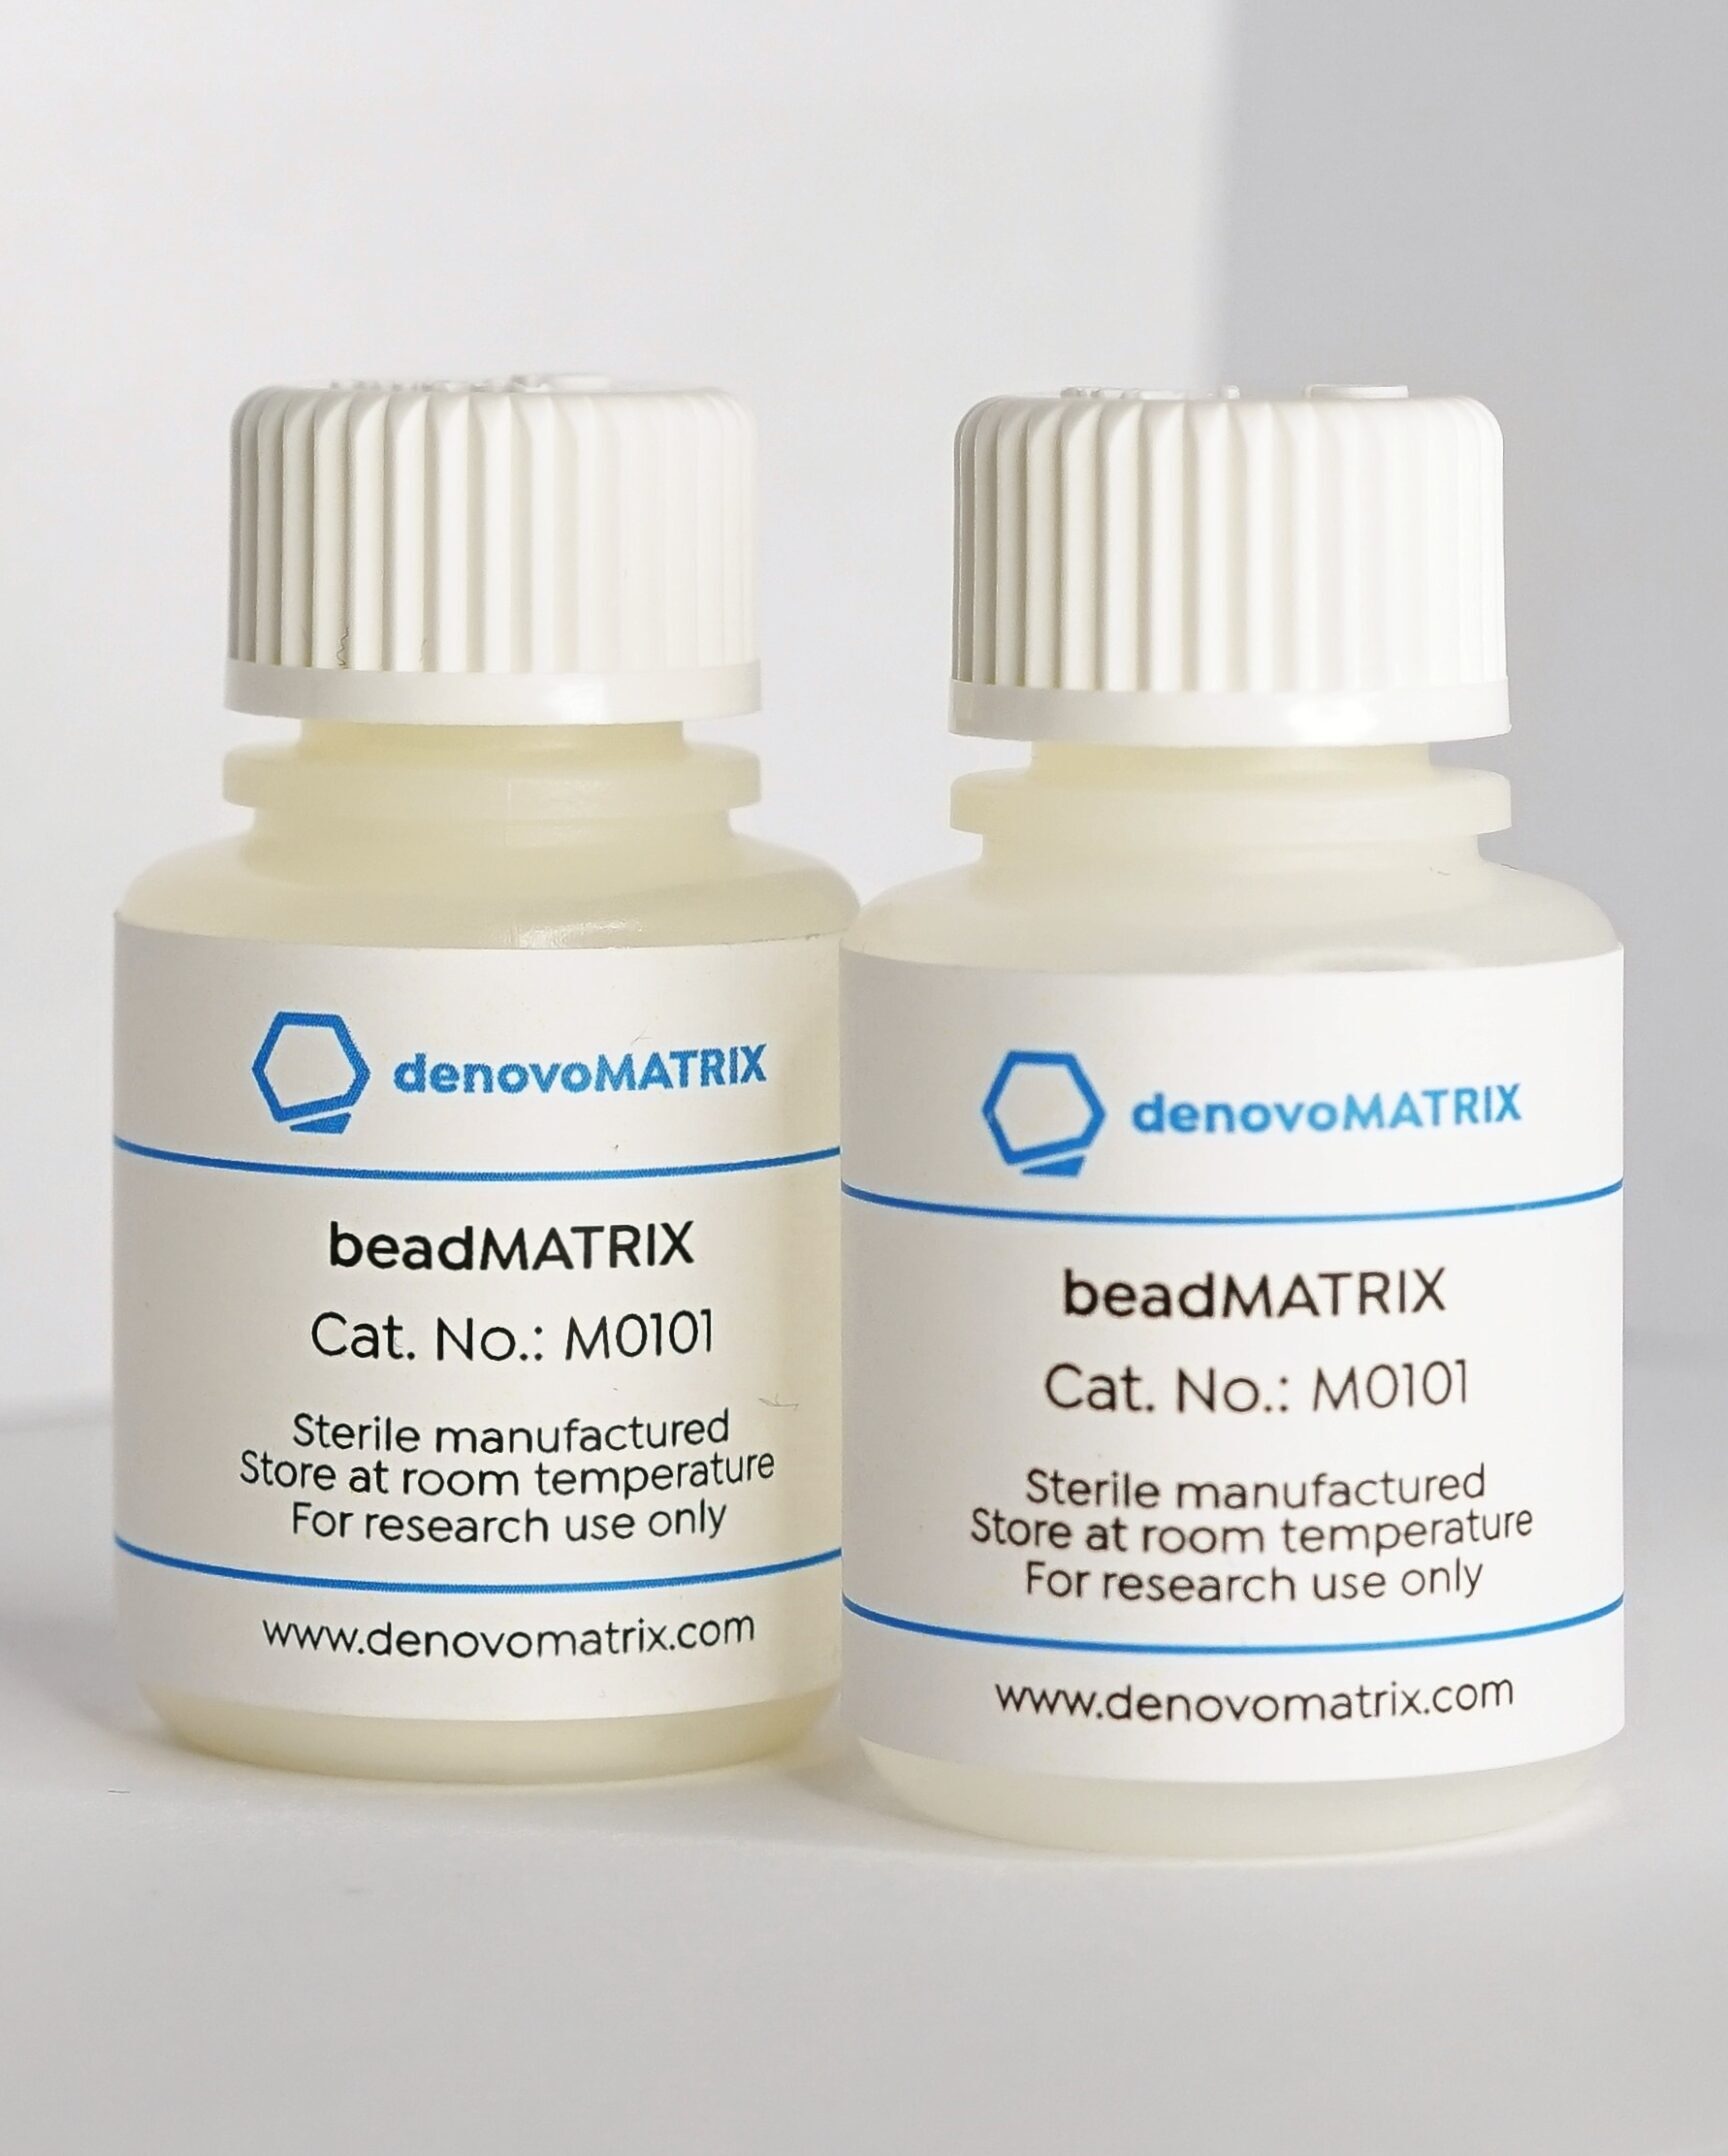 2 vials with beadMATRIX microcarrier